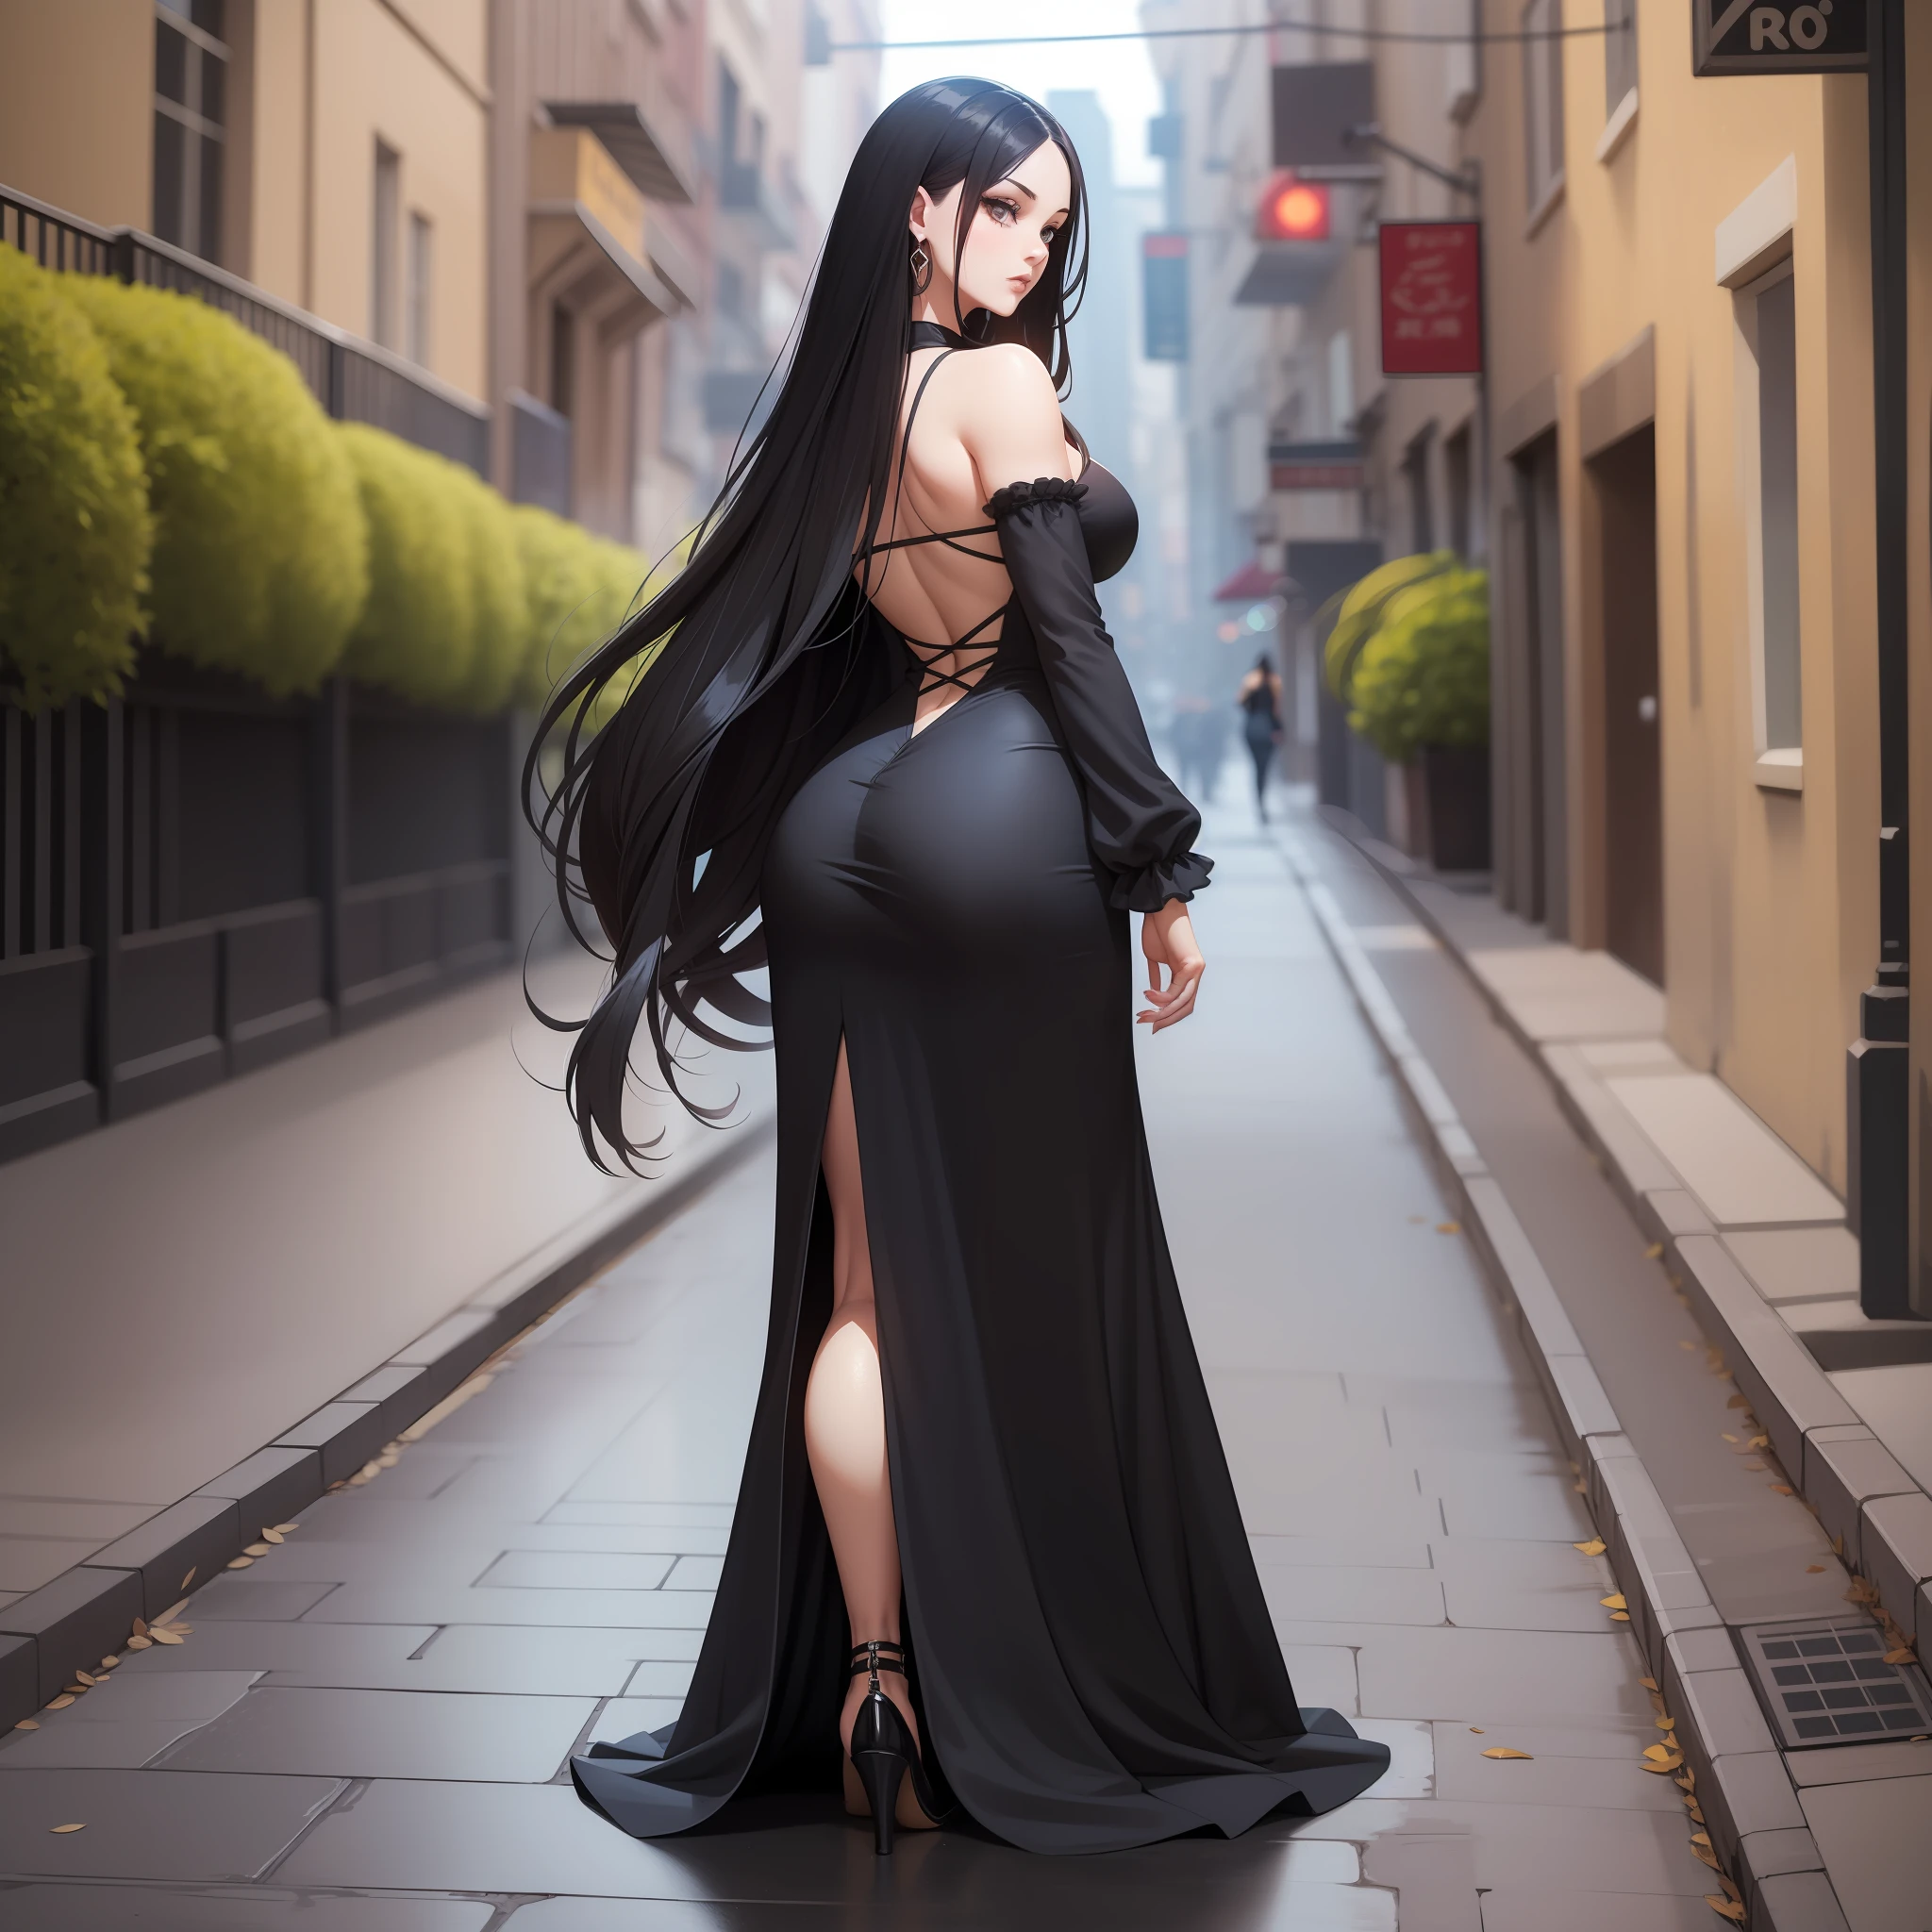 Black long hair, Patricia look-alike, long black dress, attractive, alluring, figure, feminine, gothic, 1980’s Tall slender figure, looking back